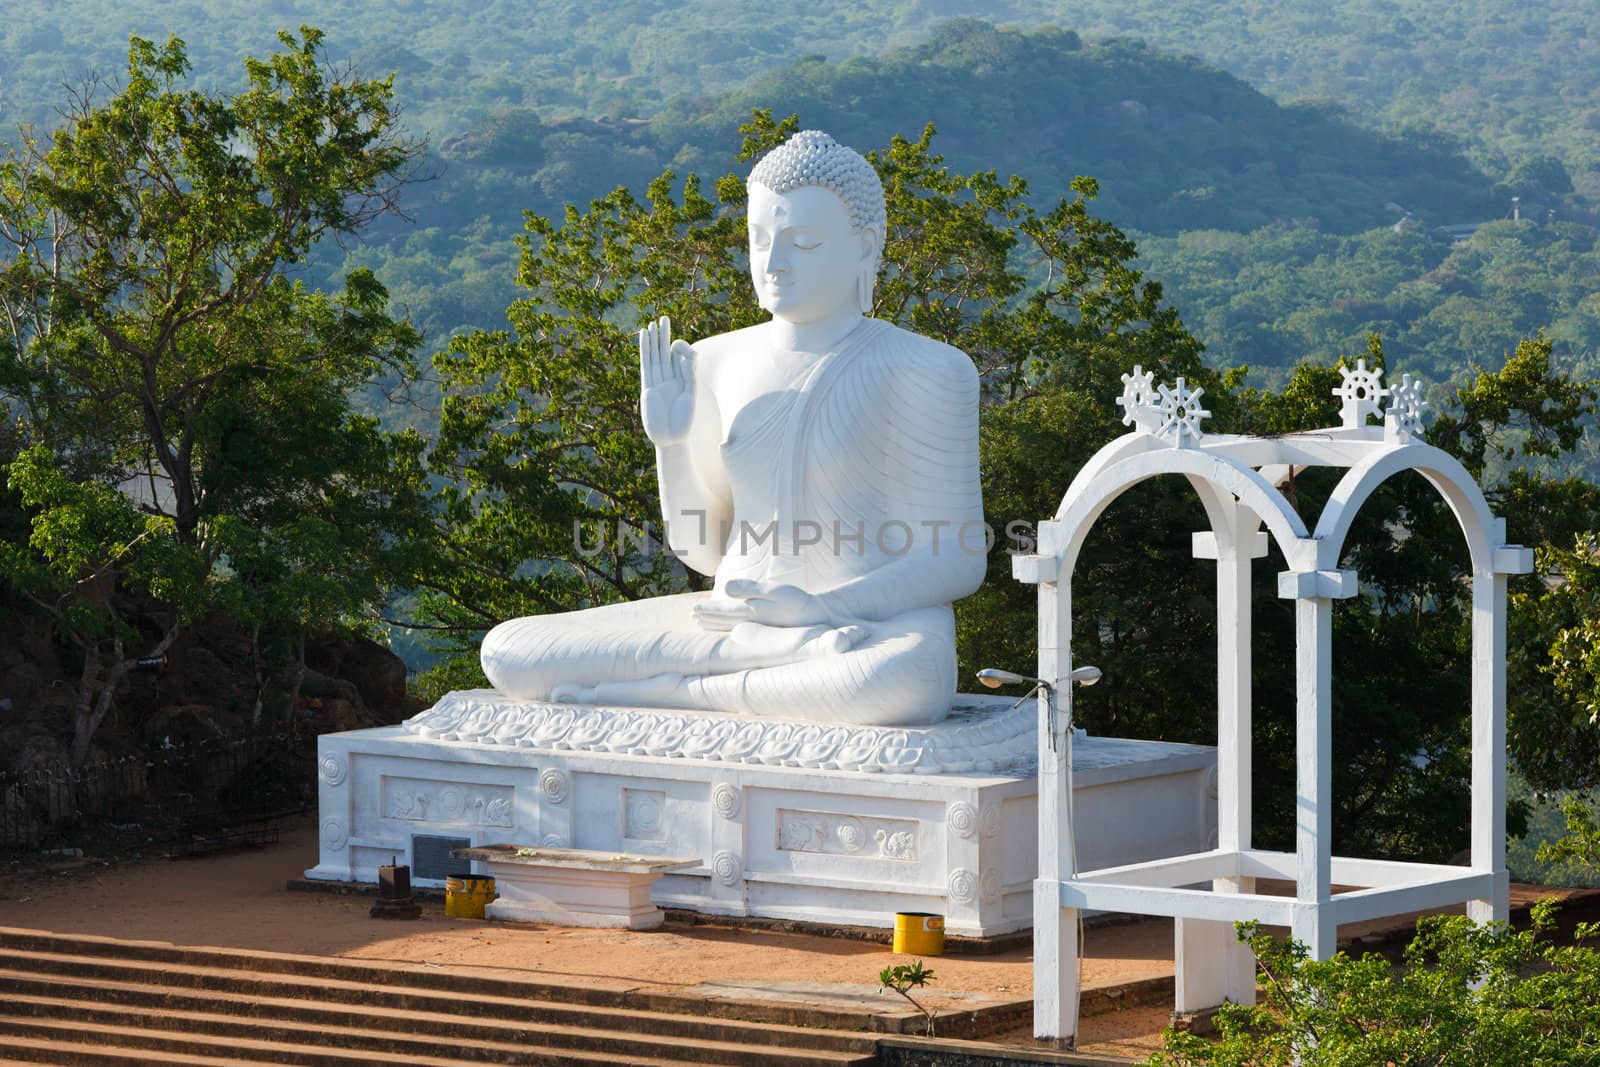 Sitting Budha image by dimol